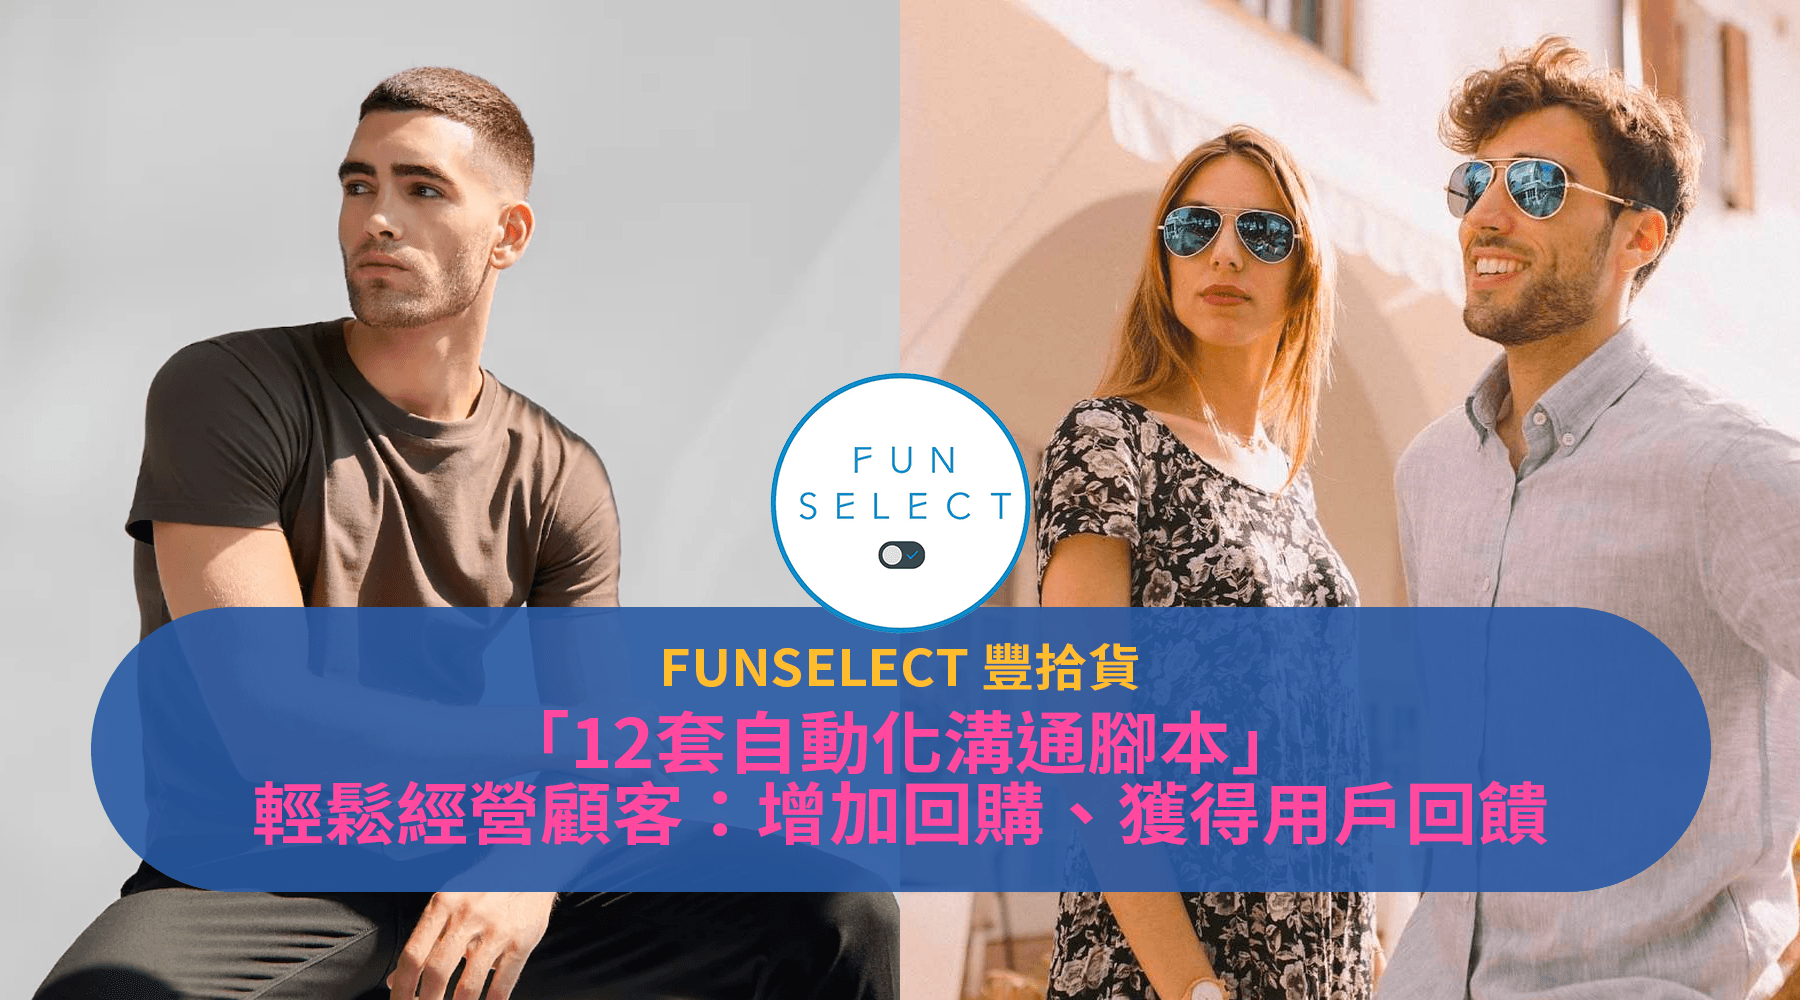 FUNSELECT 豐拾貨：服飾電商，用智能CRM「12套自動化溝通腳本」深度經營顧客、增加回購、累積用戶回饋